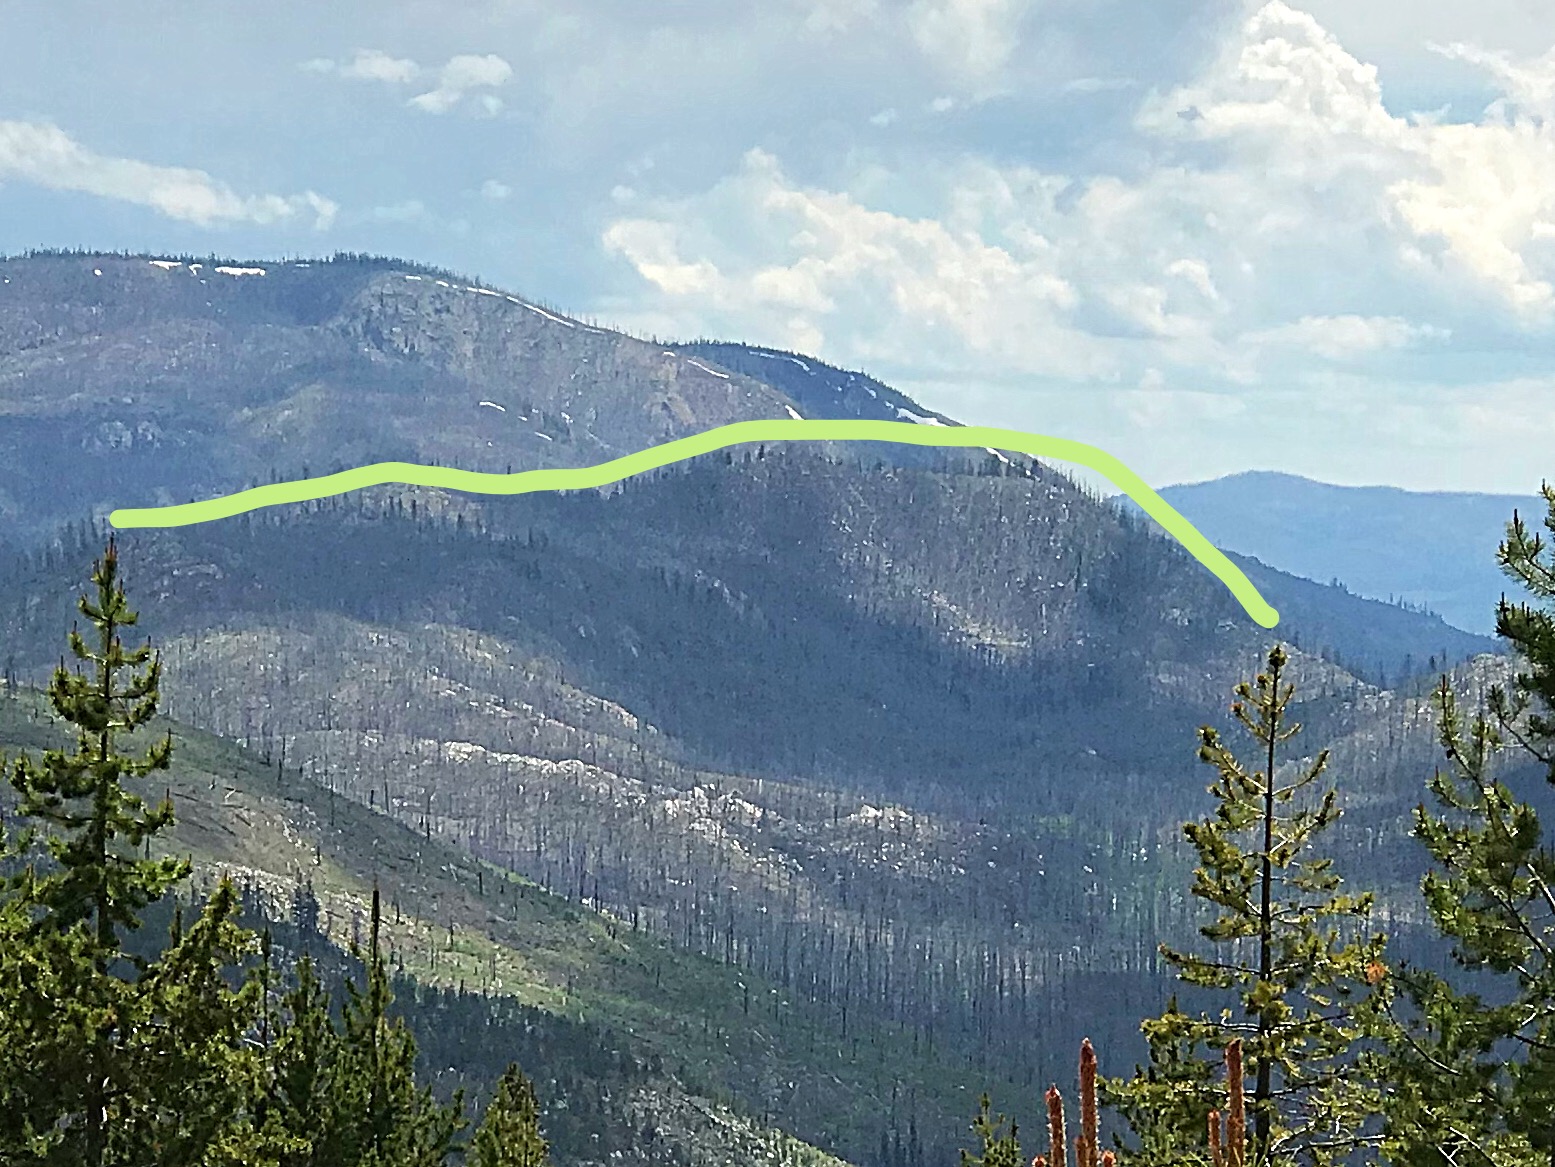 Peak 7740 viewed from Buck Mountain. The yellow lime follows the summit ridge.